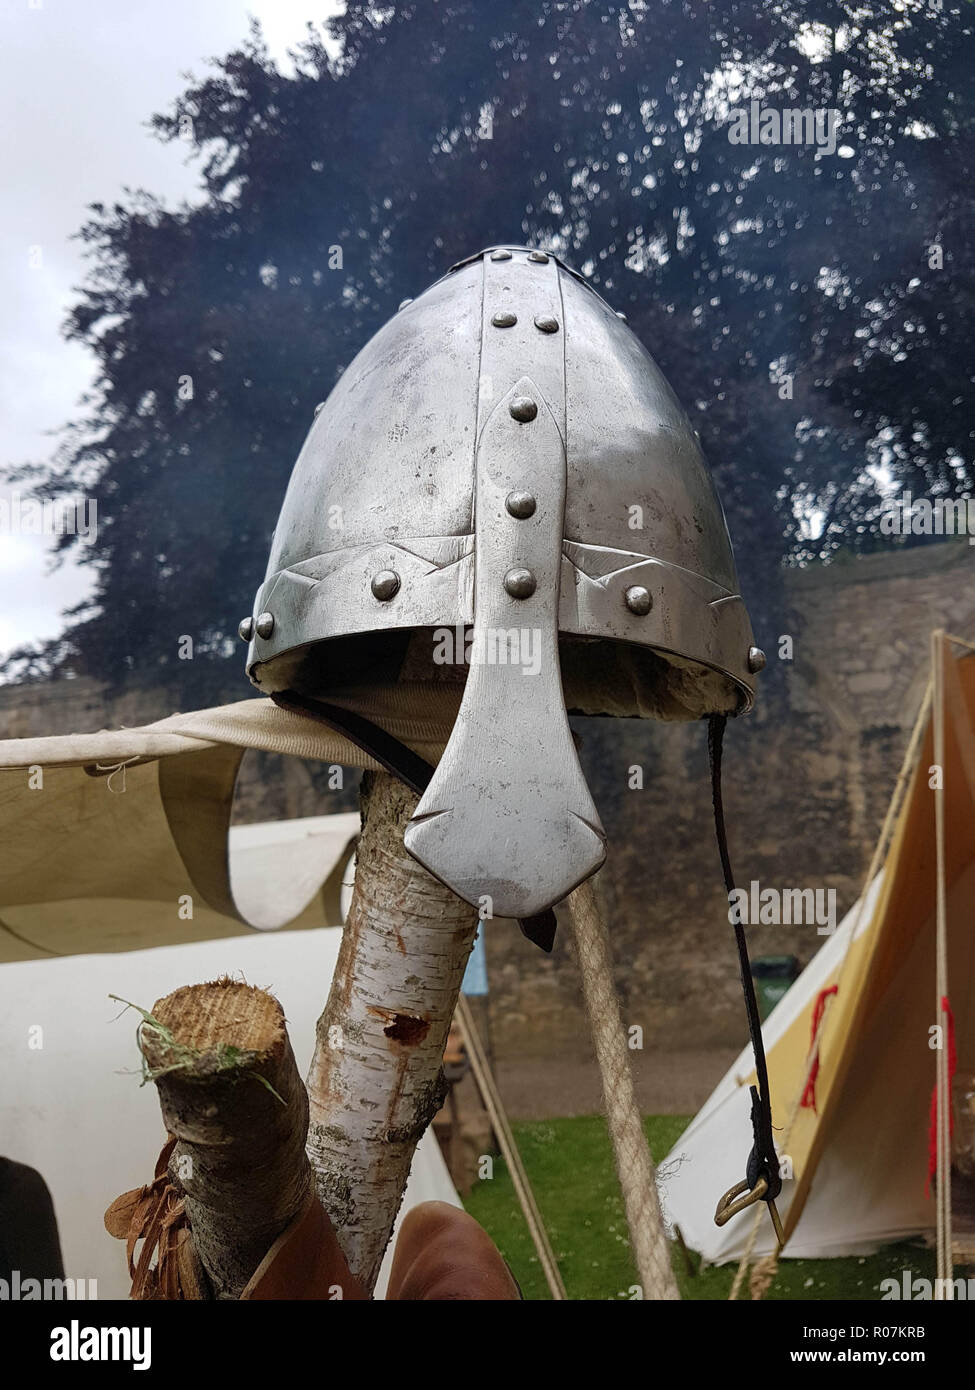 An iron knights helmet on a wooden pole. Stock Photo